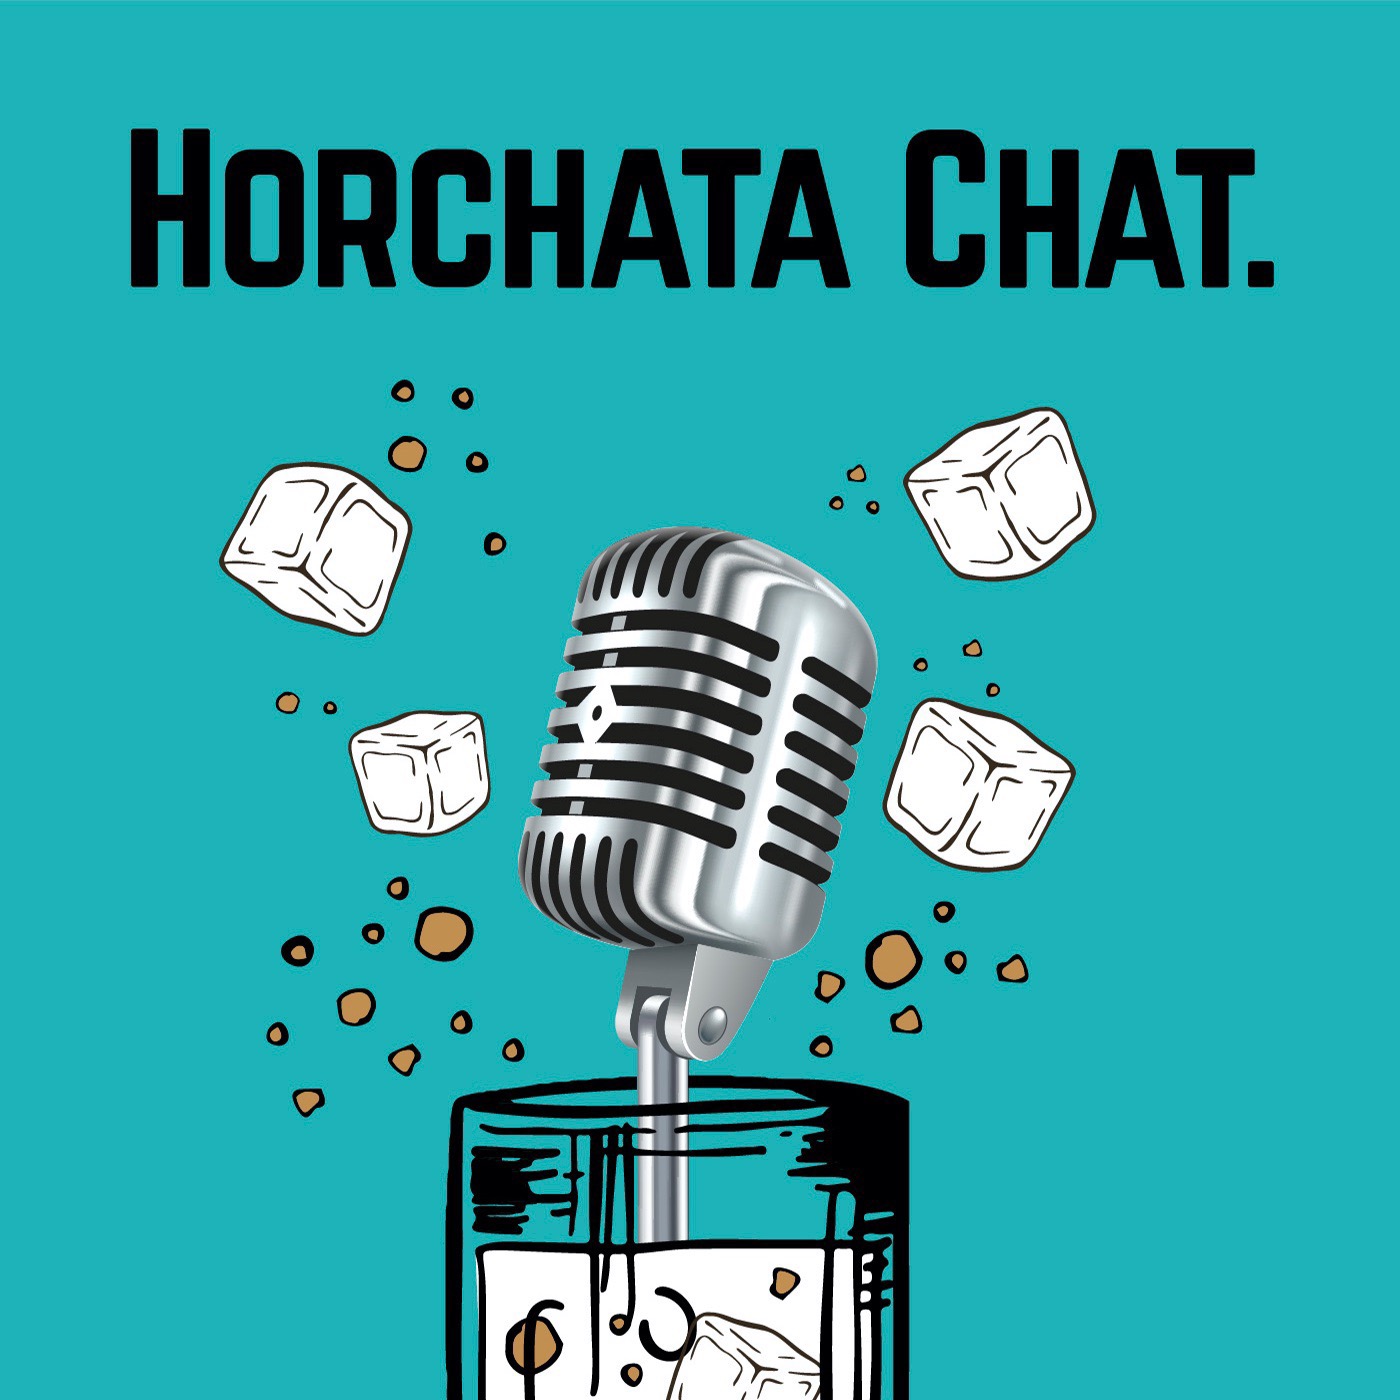 Horchata Chat